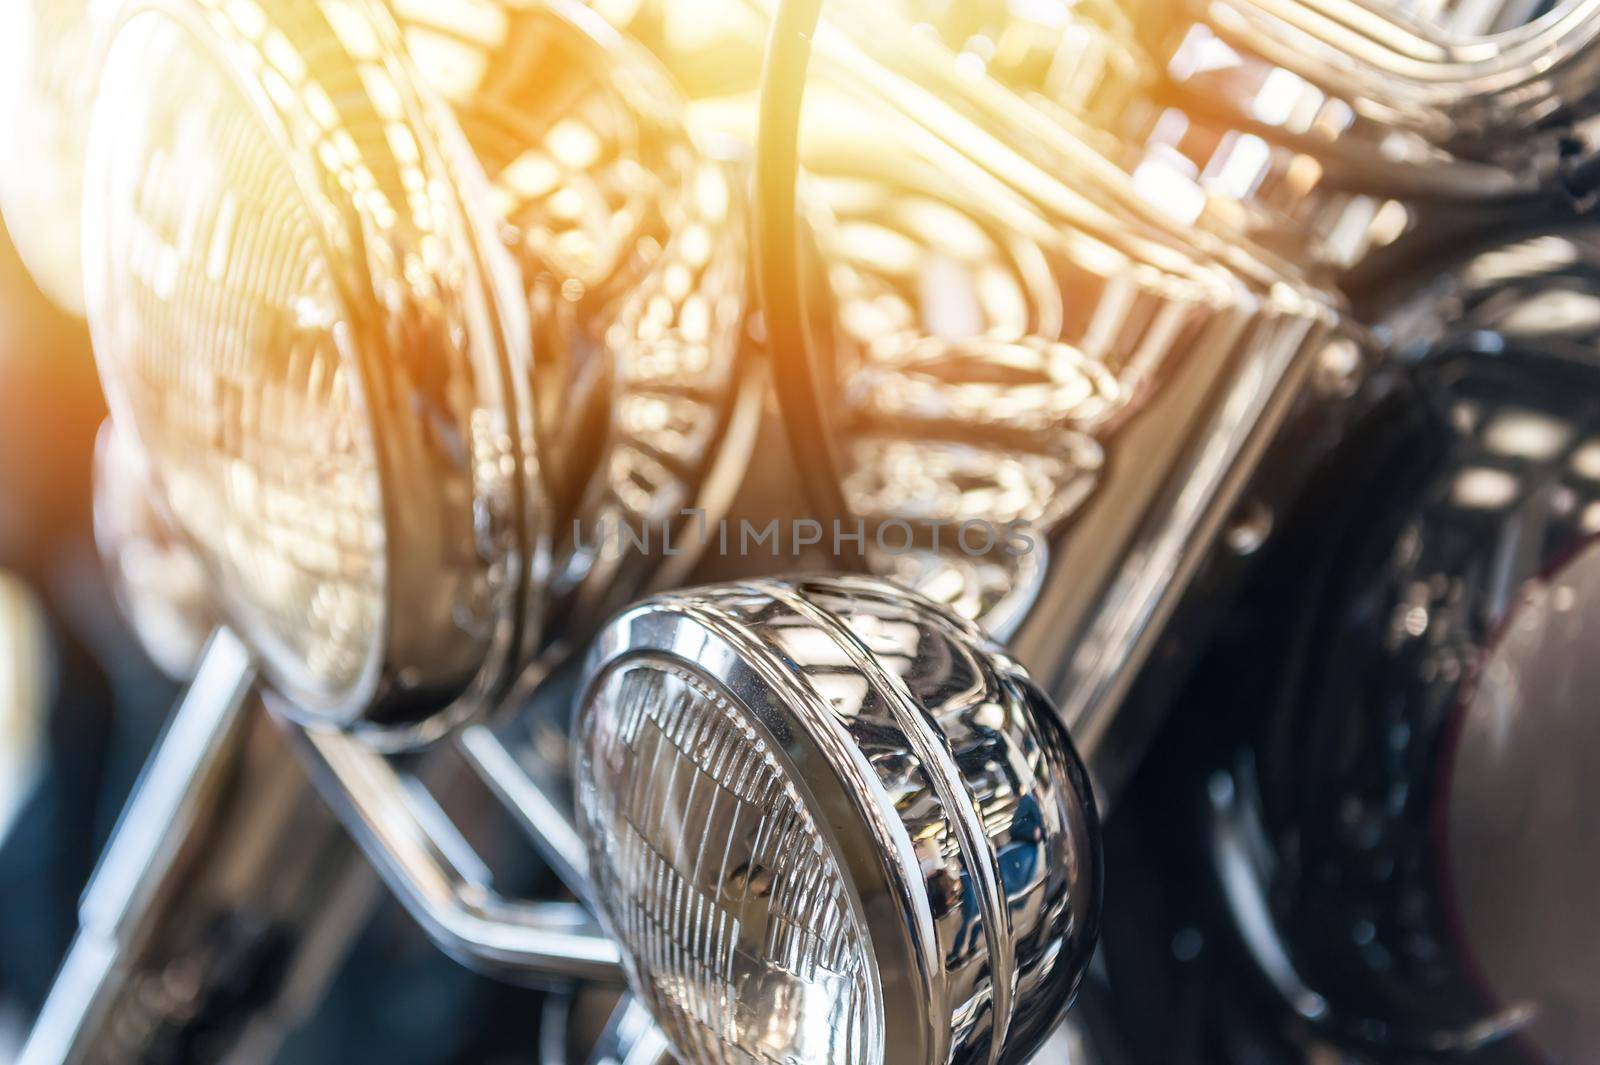 Headlight of a powerful motorbike by cla78